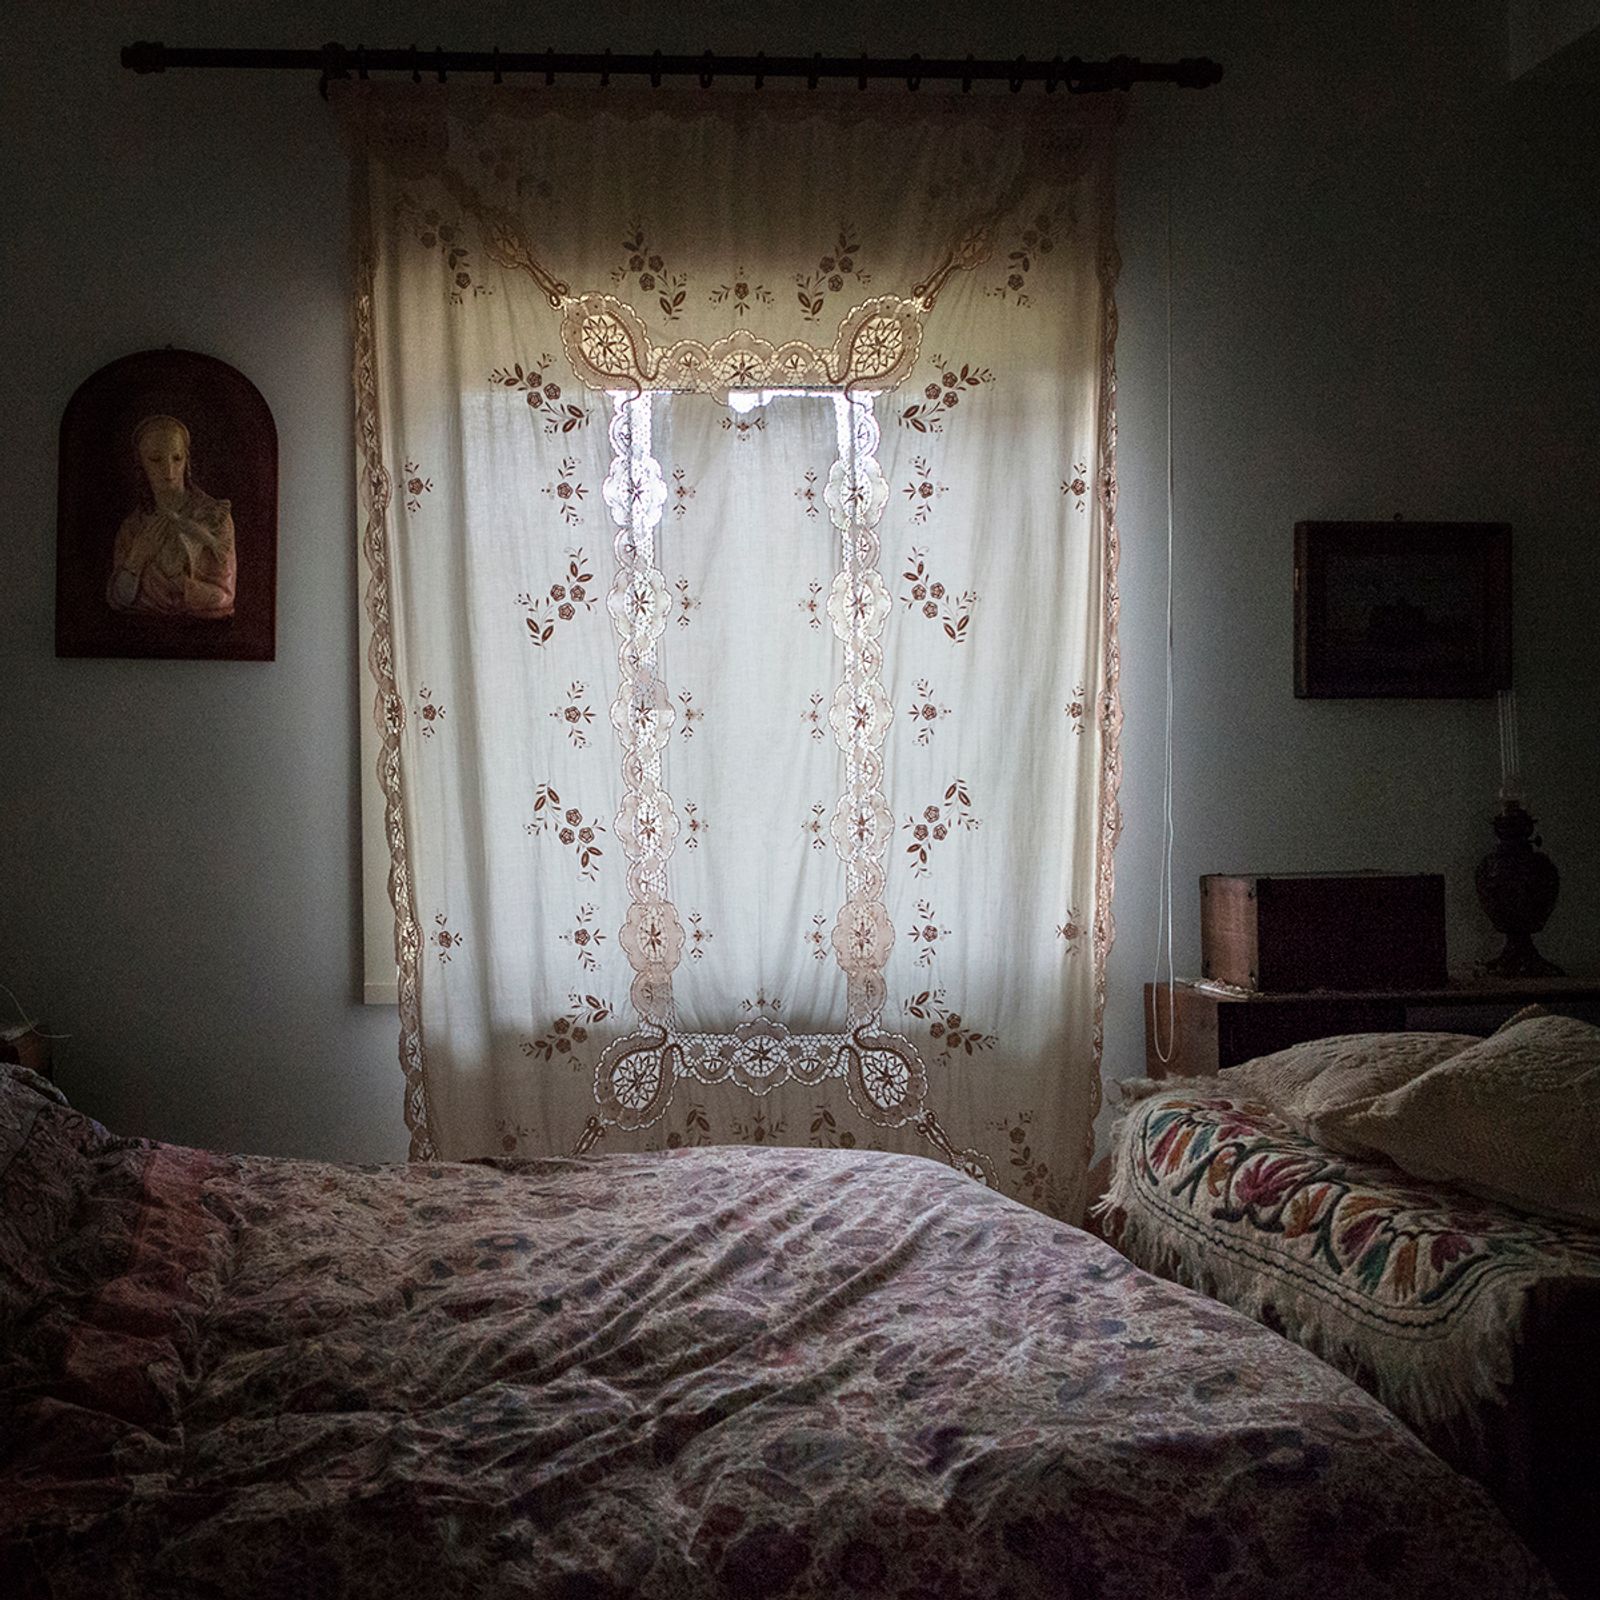 © Melissa Ianniello - Lara Elia and Lia D'Urso's bedroom (Nicolosi – Sicily).